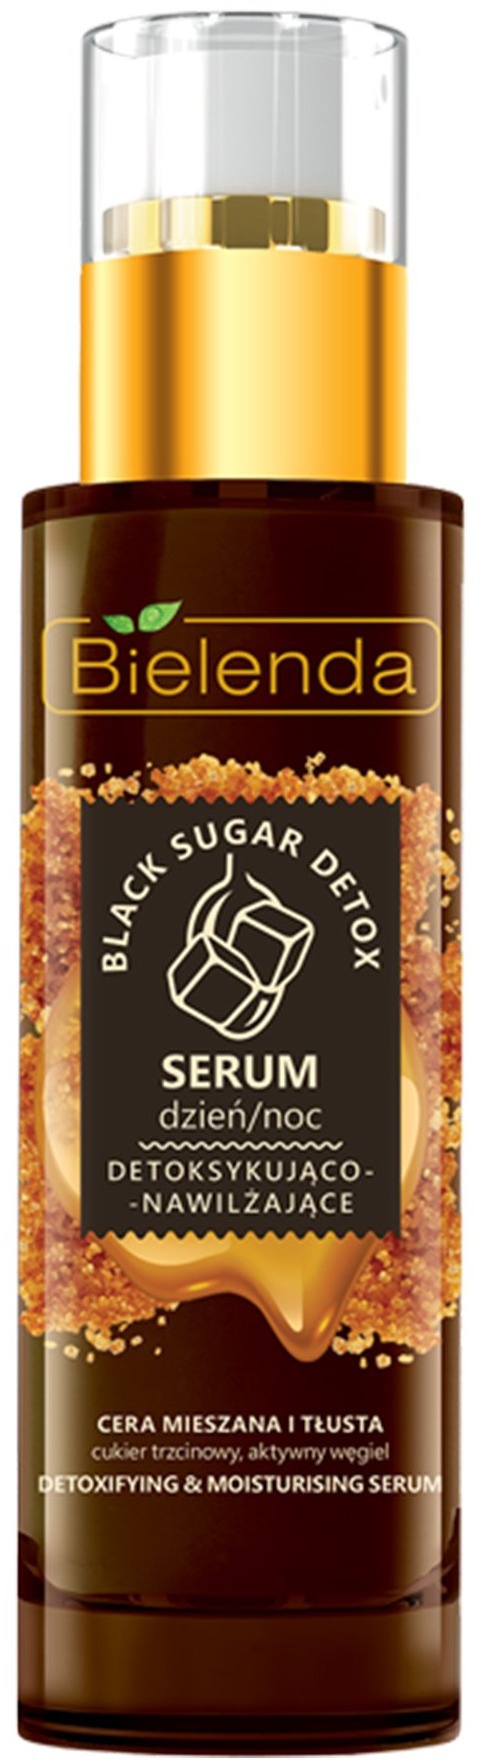 Bielenda Black Sugar Detox Detoxifying And Moisturizing Face Serum Day/Night For Mixed And Greasy Skin